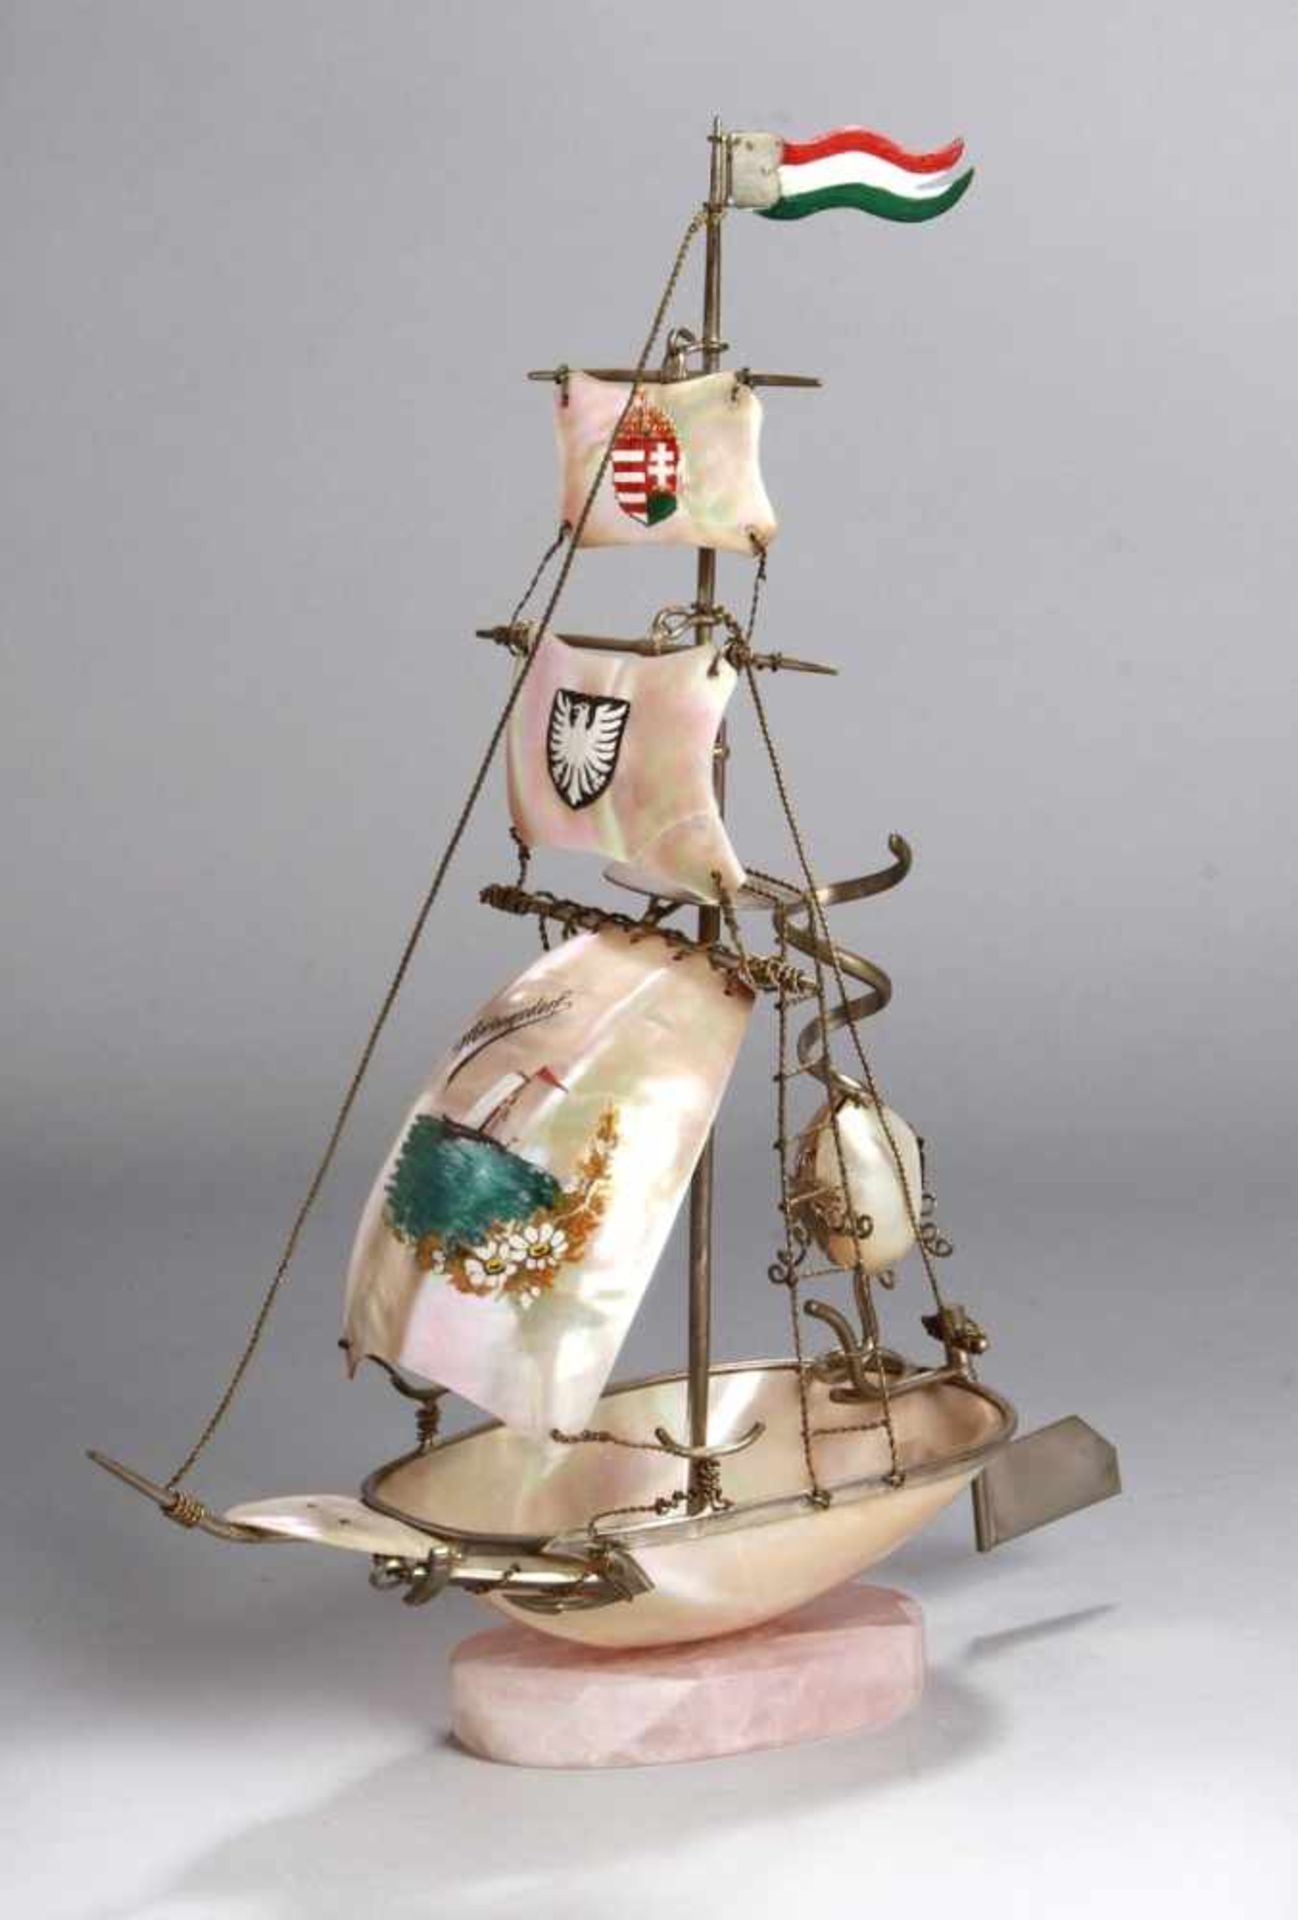 Zierobjekt, "Segelschiff", 1. Hälfte 20. Jh., Ostseebad-Mitbringsel, auf